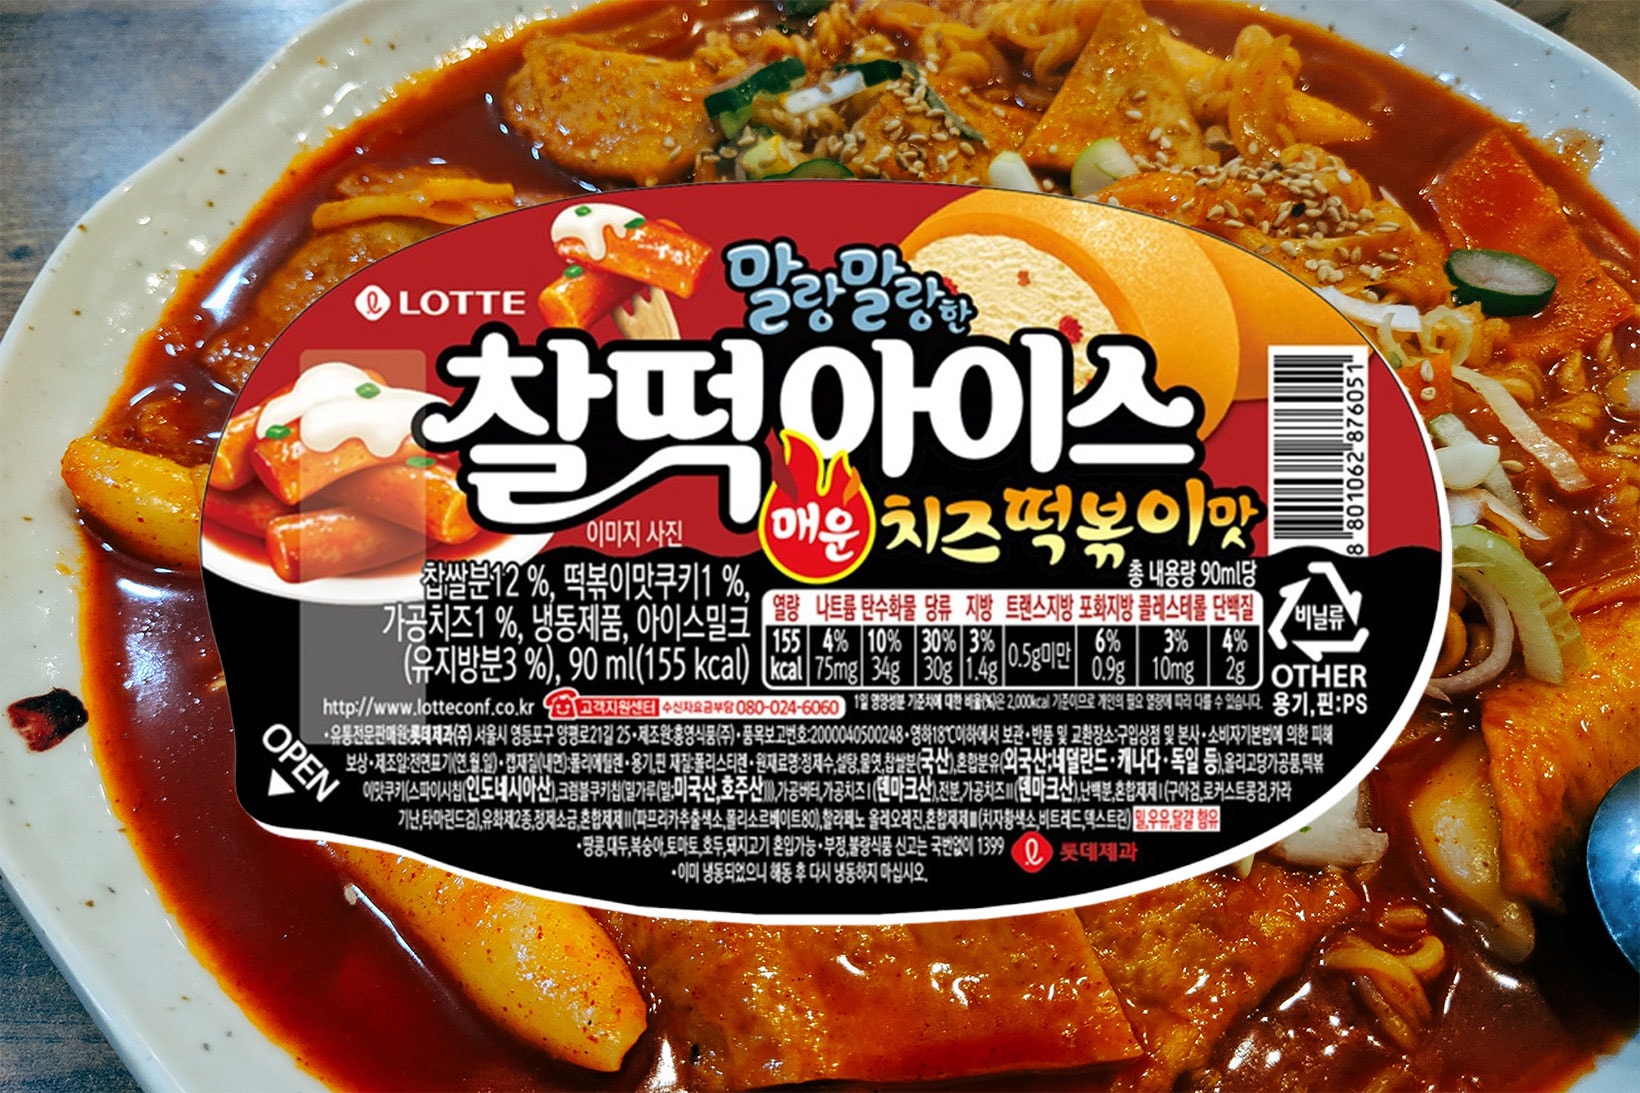 korean food spicy rice cake ice cream tteokbokki flavor chaltteok lotte confectionery 